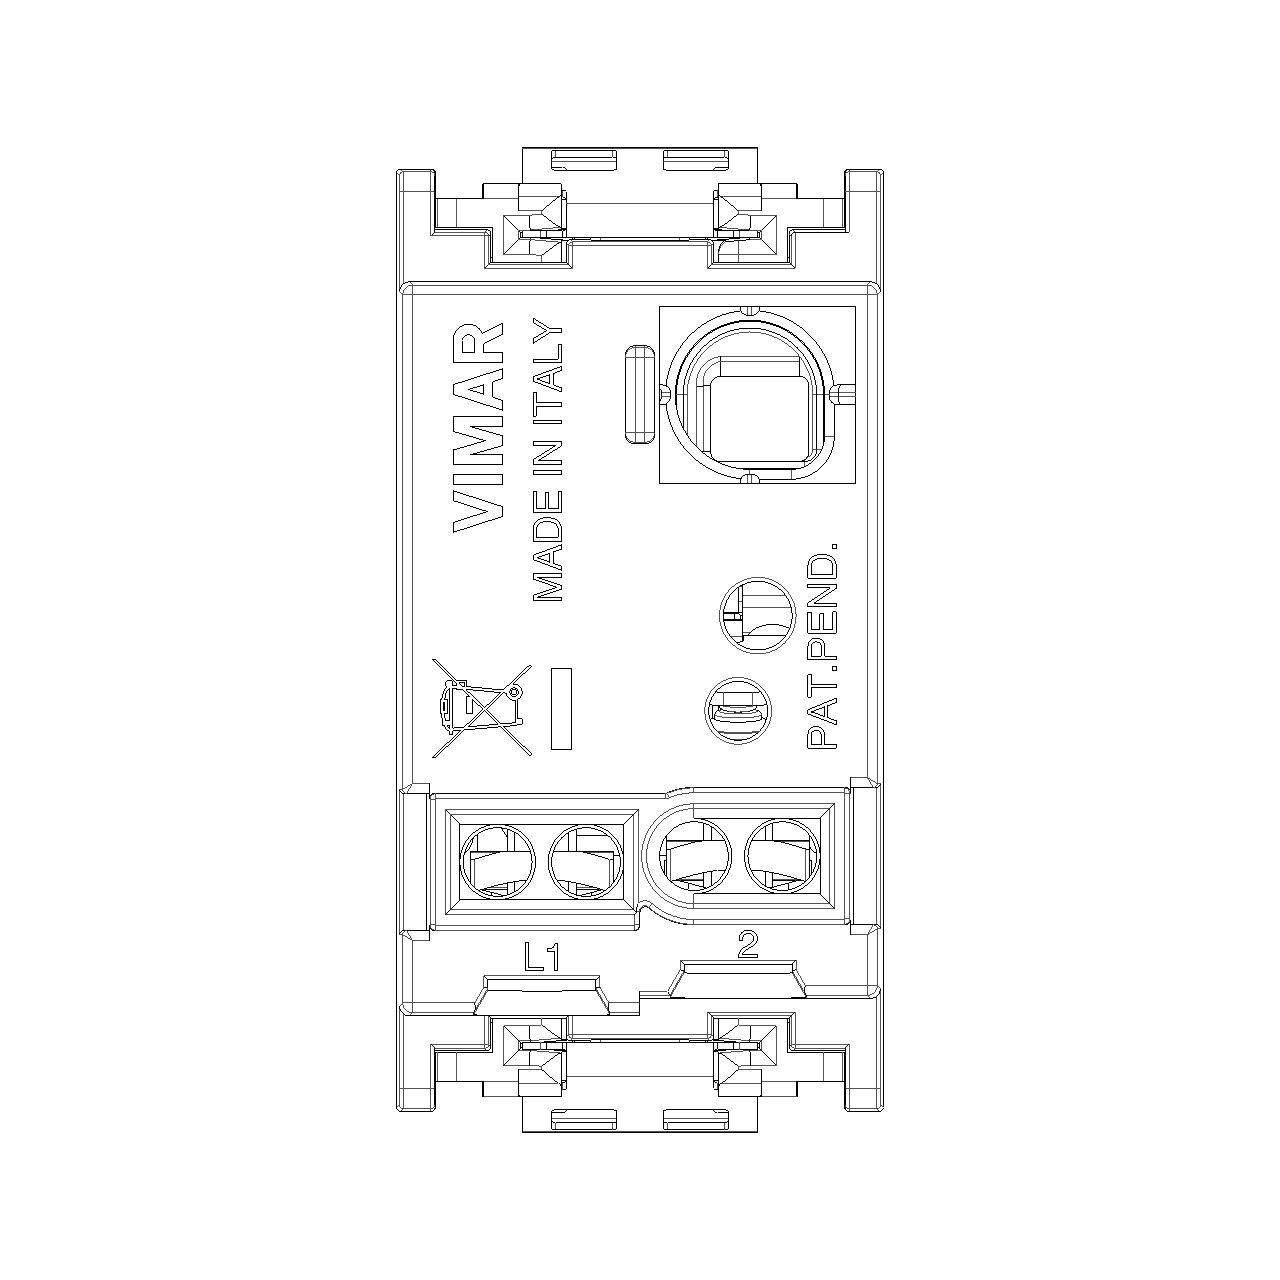 Vimar - Idea 16001 1-Way Rocker Switch - 1P 16 AX 250 V, IP40, Plastic - Apollo Lighting